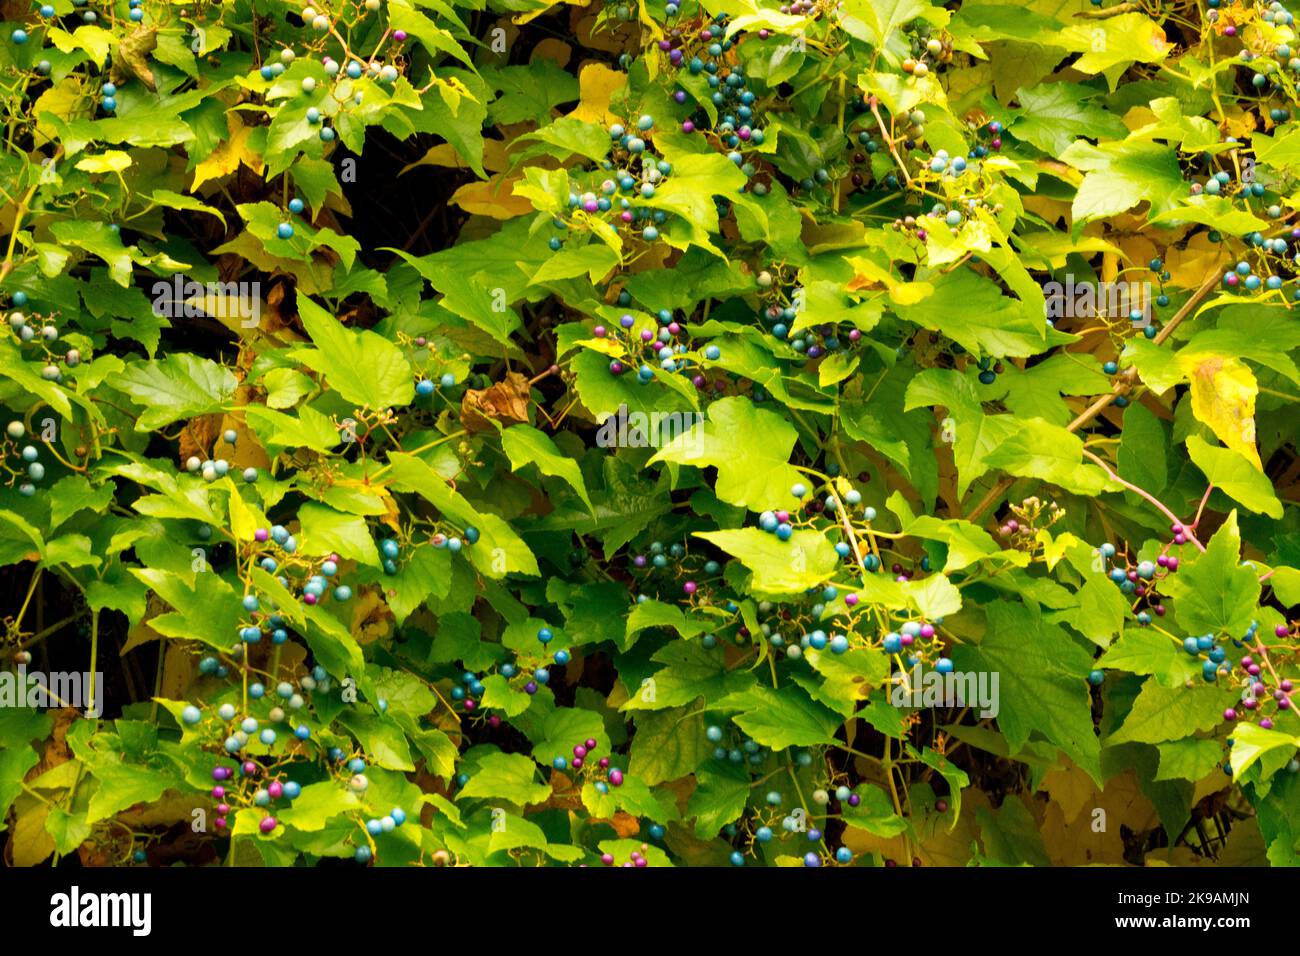 Ampelopsis heterophylla, Herbst, Porcelain Berry Vine, Klettern, Pflanze, Blätter, Beeren Laub Kletterer, Bedeckung Stockfoto